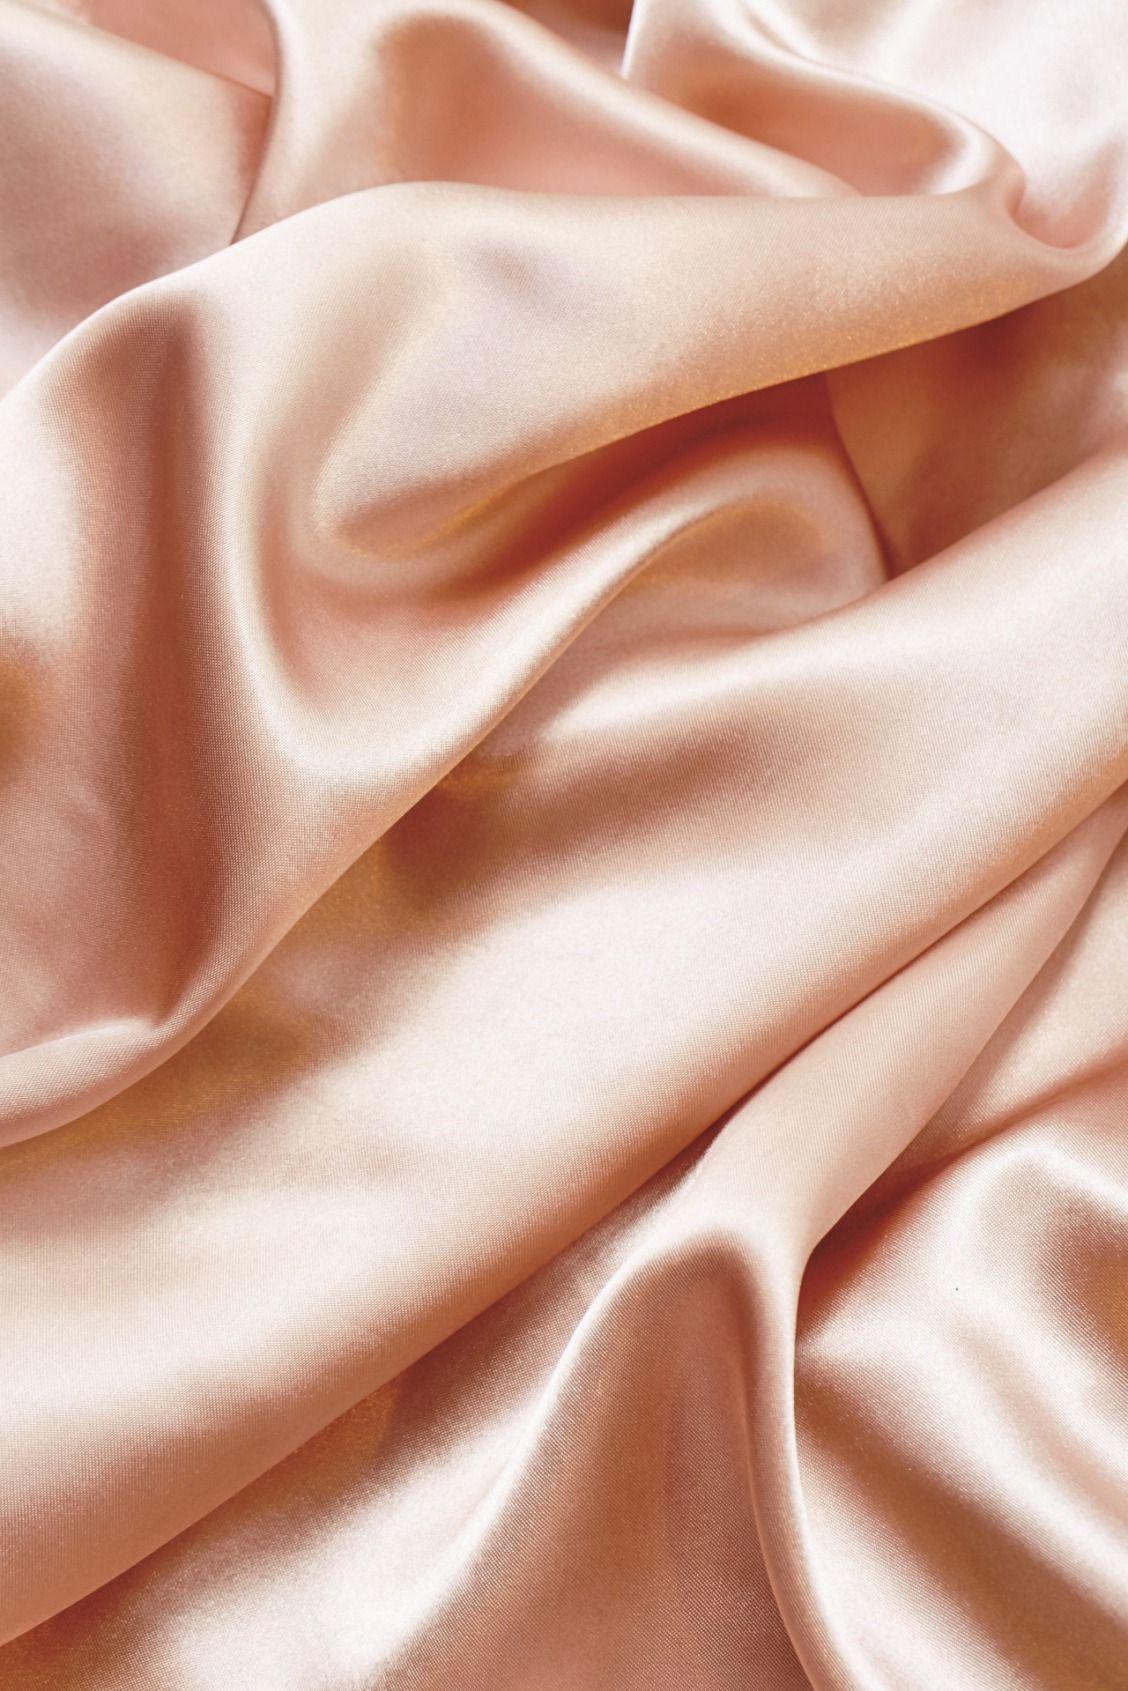 Pink Silk Aesthetic Wallpaper Free Pink Silk Aesthetic Background